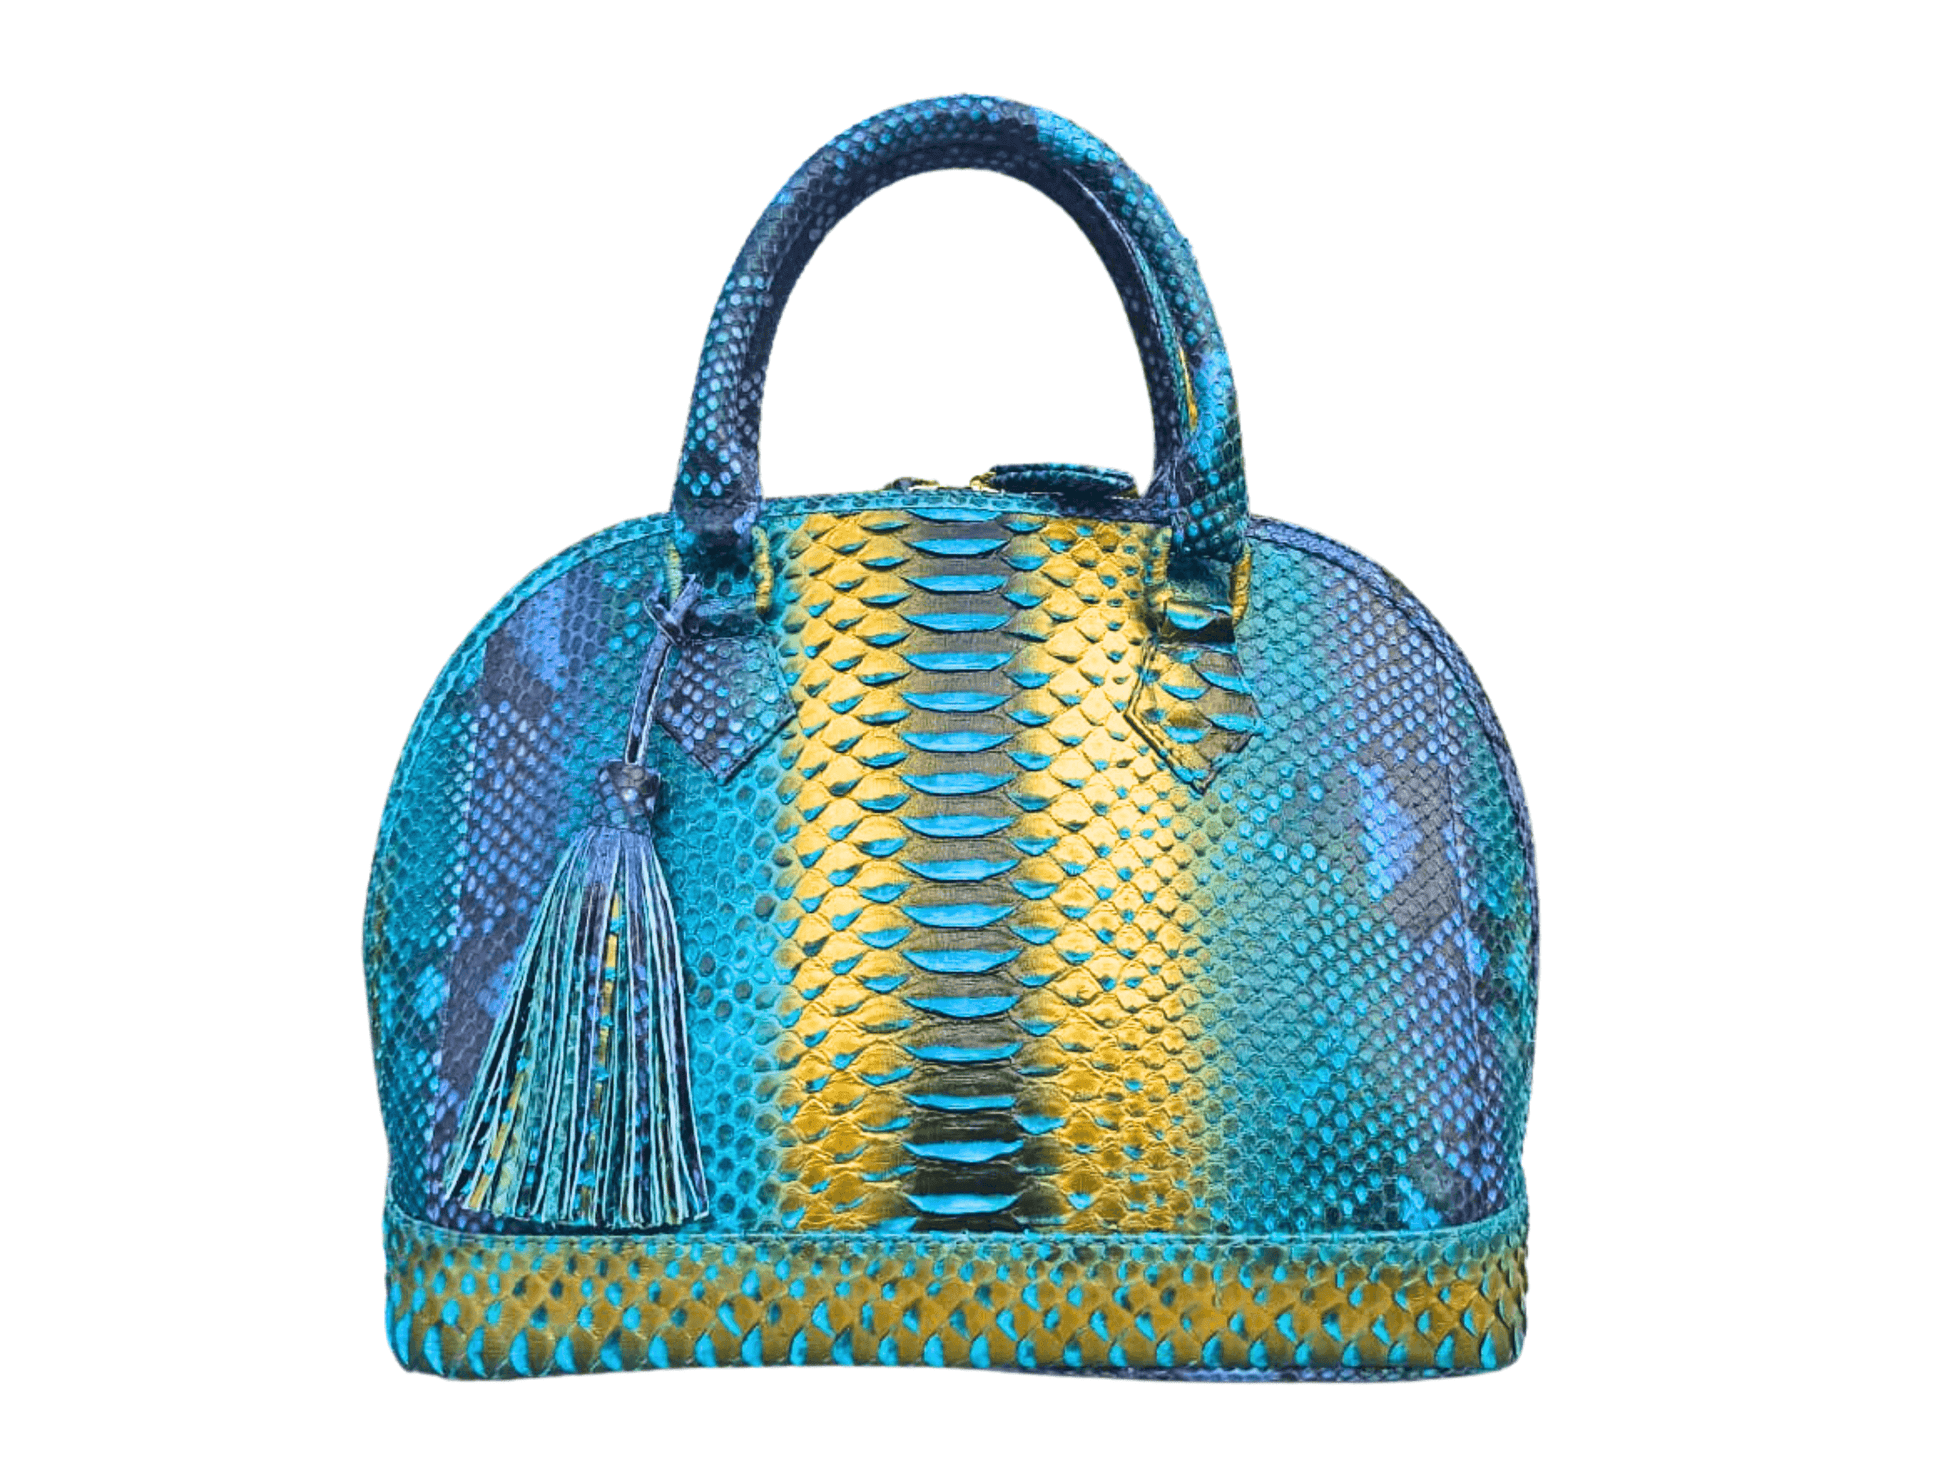 Snakeskin Bowler Bag Hippie Blue Python Jacket by LFM Fashion